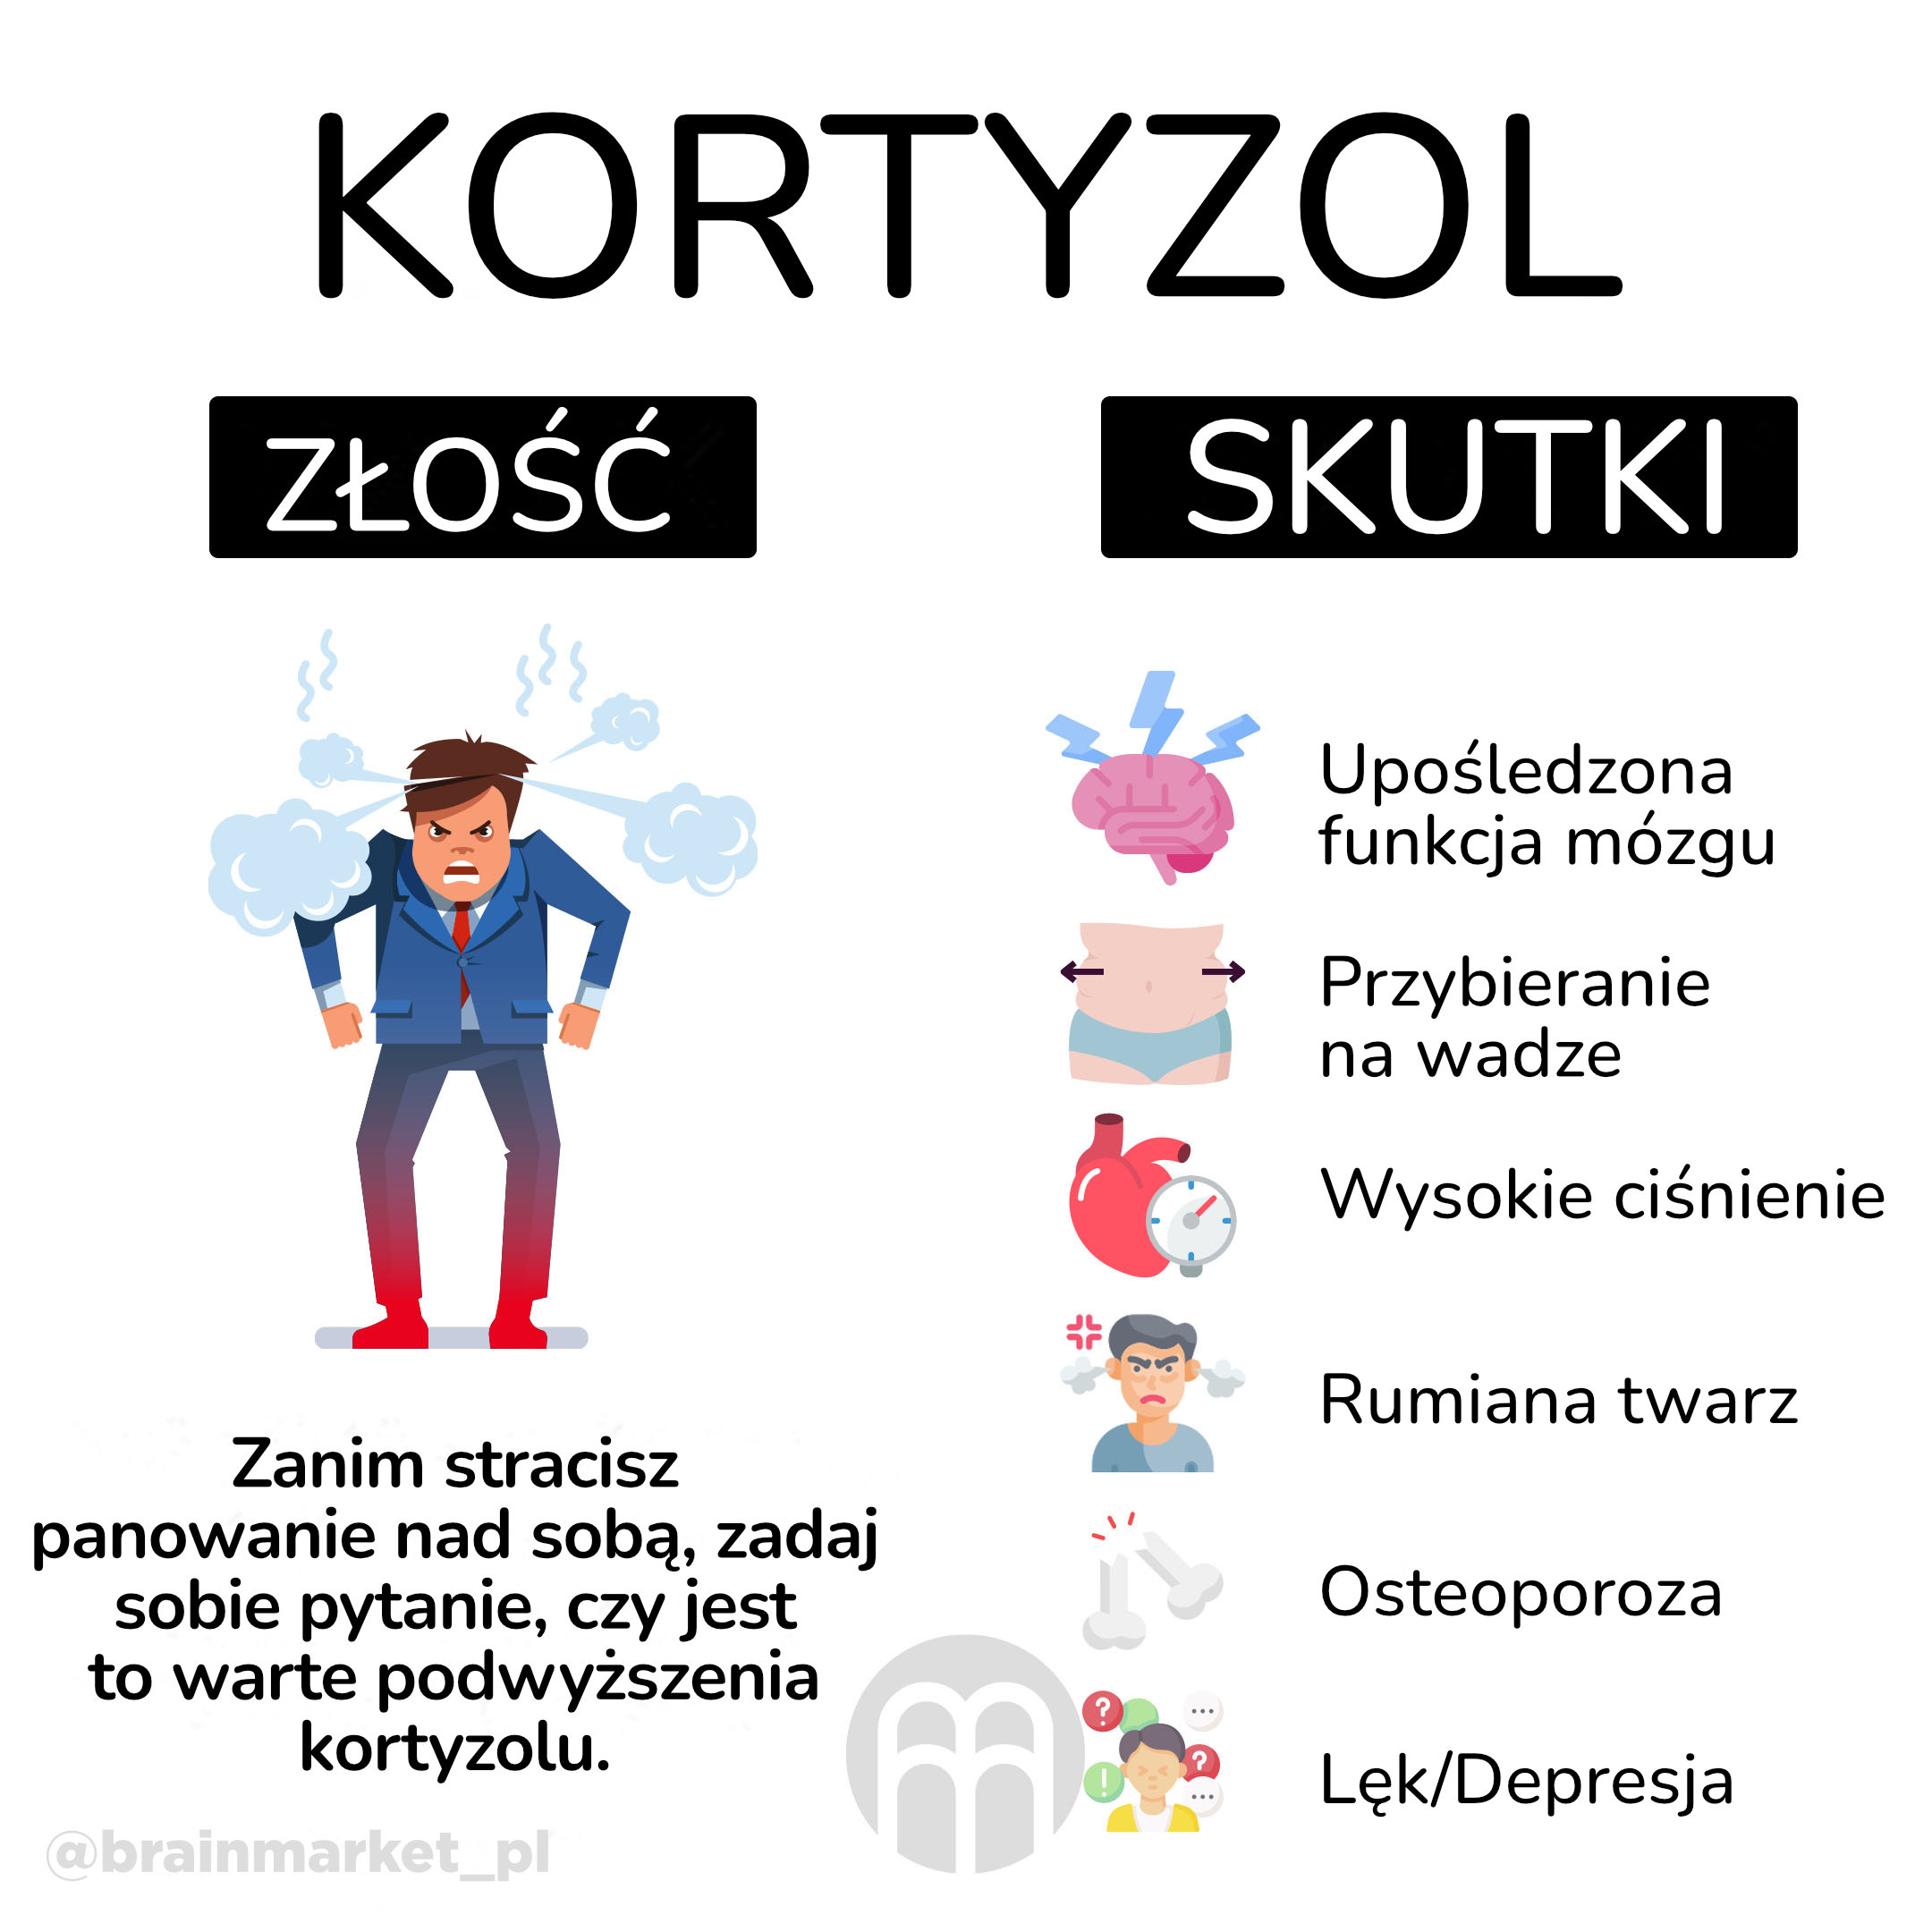 kortizol_infografika_brainmarket_pl